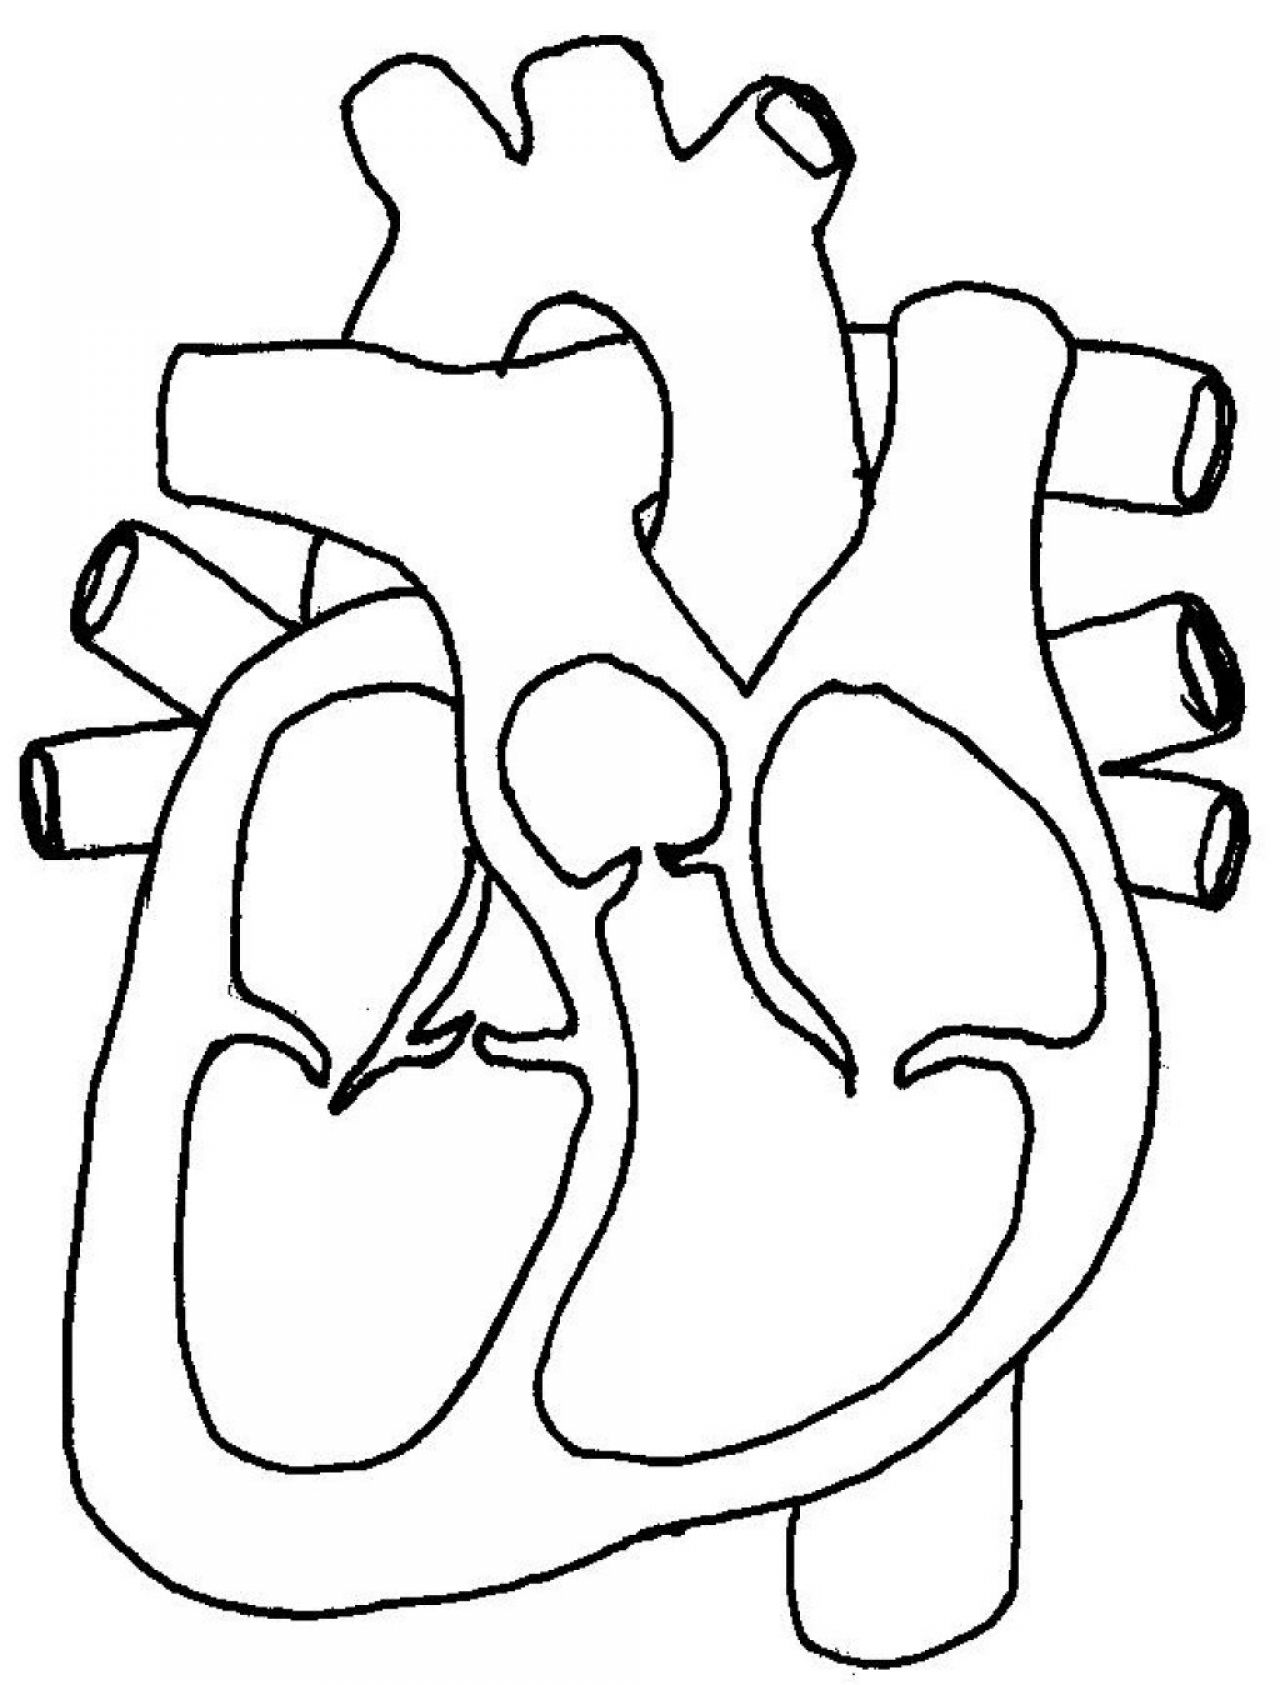 Human Heart Diagram Cross Section | Human Anatomy Diagram